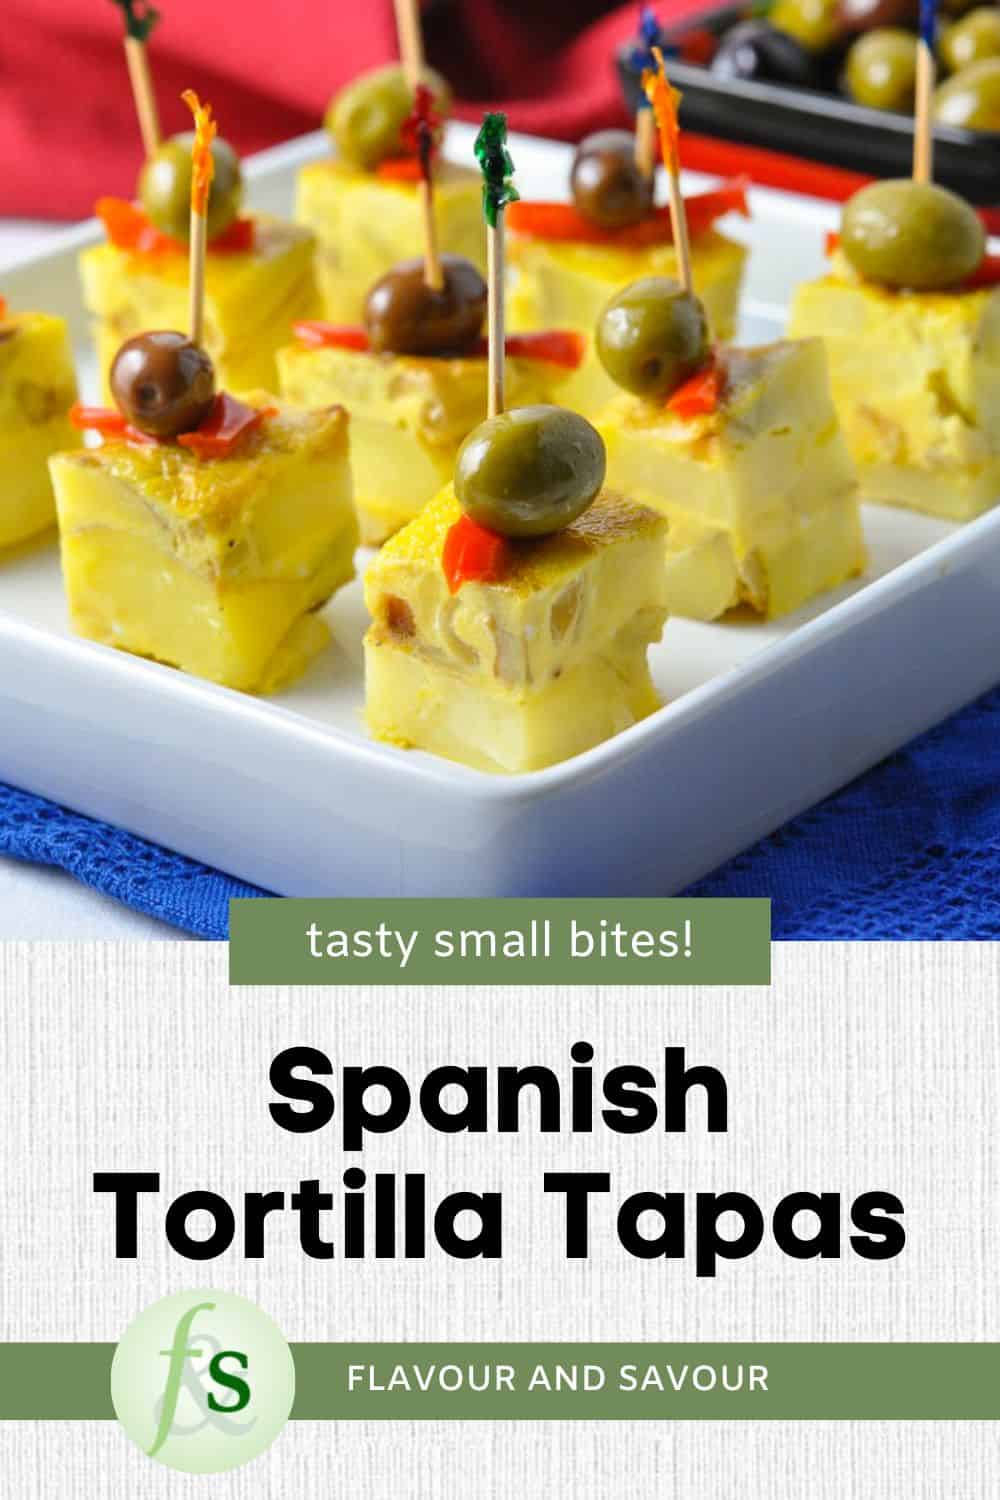 Tortilla Española - Traditional Spanish Tortilla Recipe - Flavour